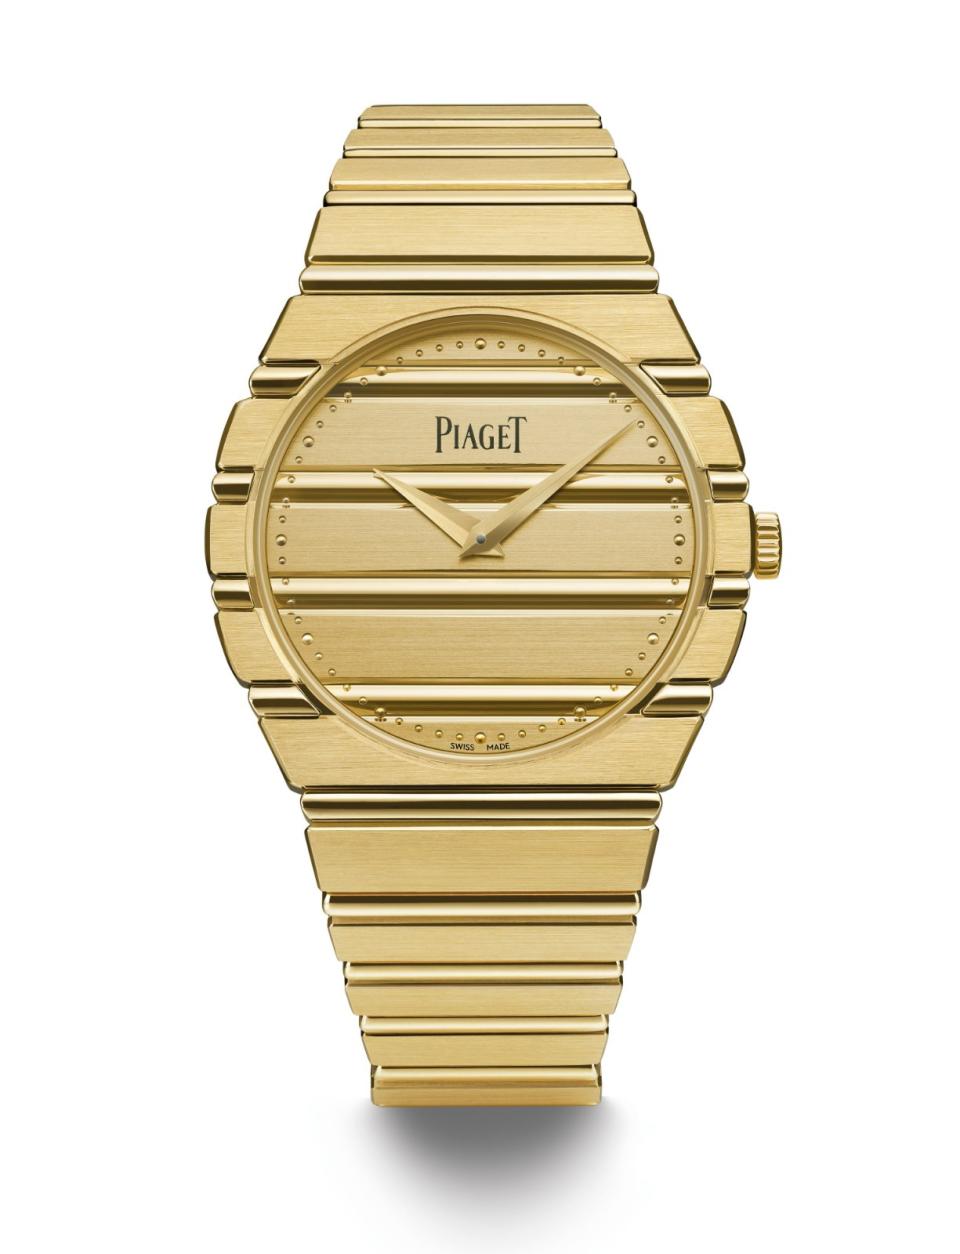 PIAGET Polo 79 系列18K黃金超薄自動上鍊腕錶。PIAGET提供